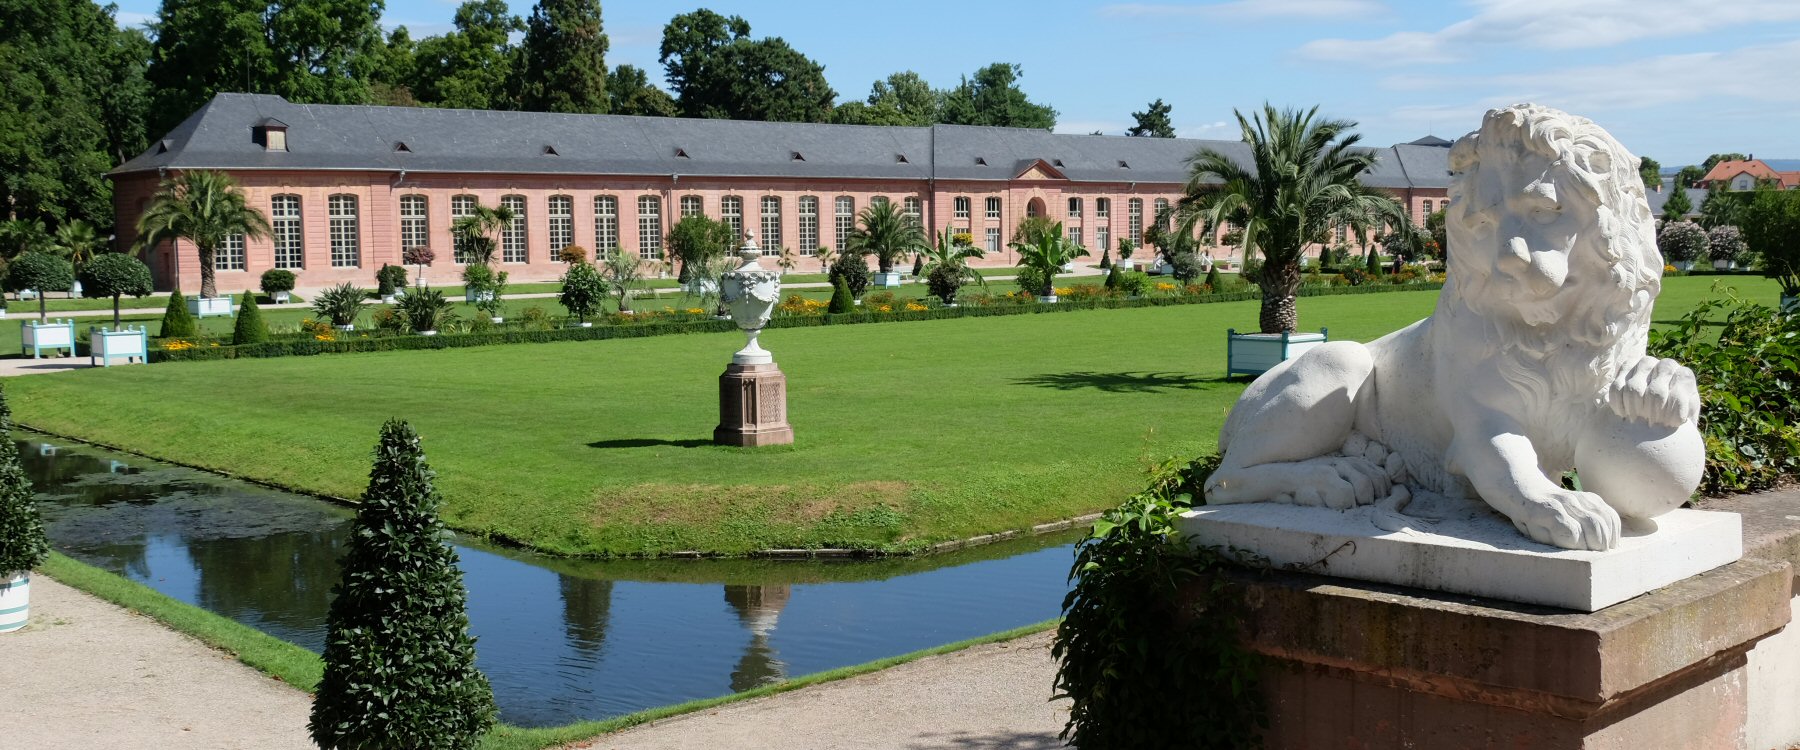 Schwetzinger Schlossgarten, Orangerie